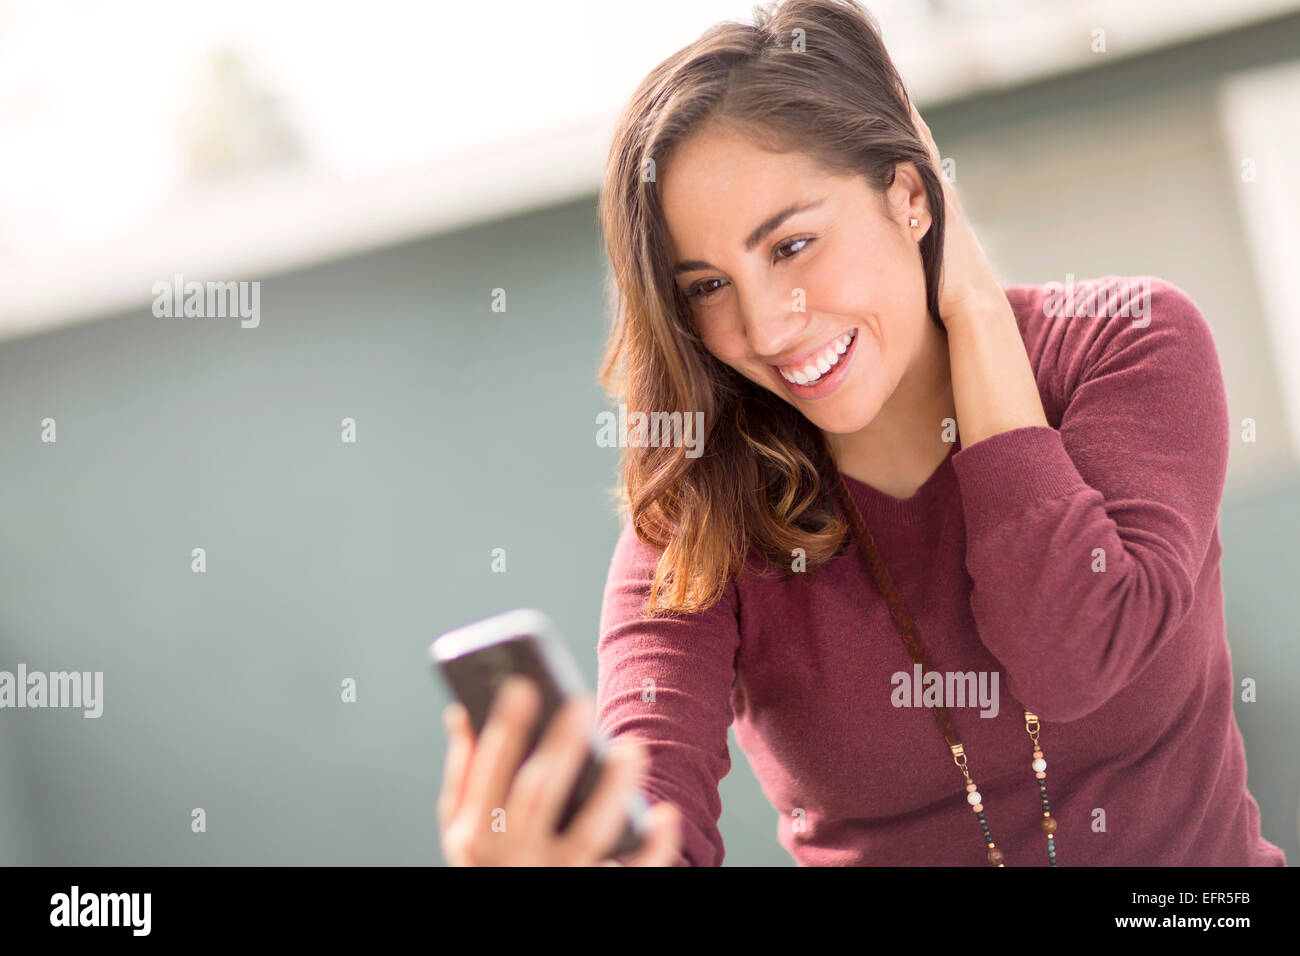 Woman using smartphone Stock Photo